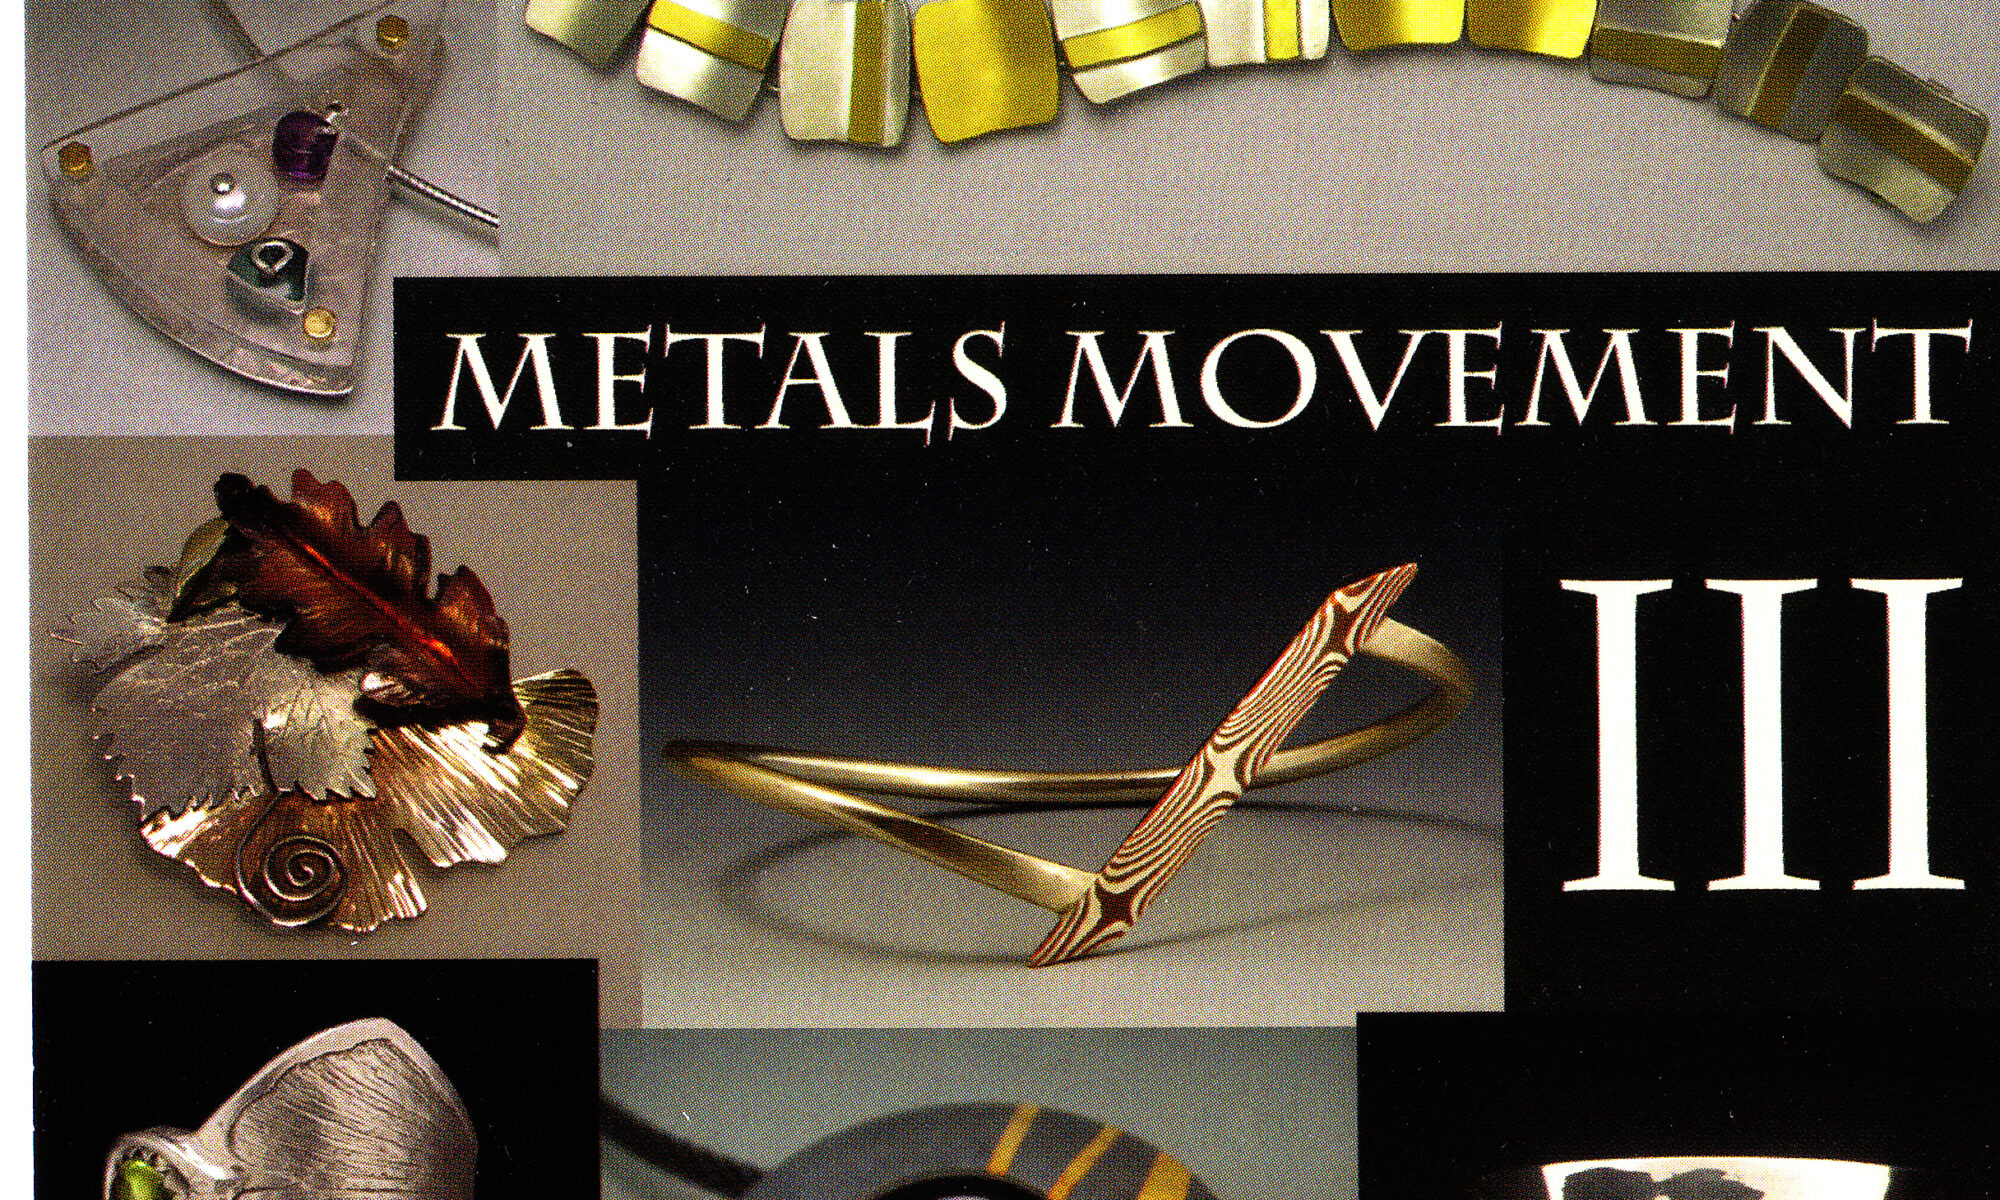 Metals Movement III; Monterey Bay Metal Arts Guild Holiday Sale; Nov 28th and 30th, 2008, 11am-5pm, at the Santa Cruz Art League